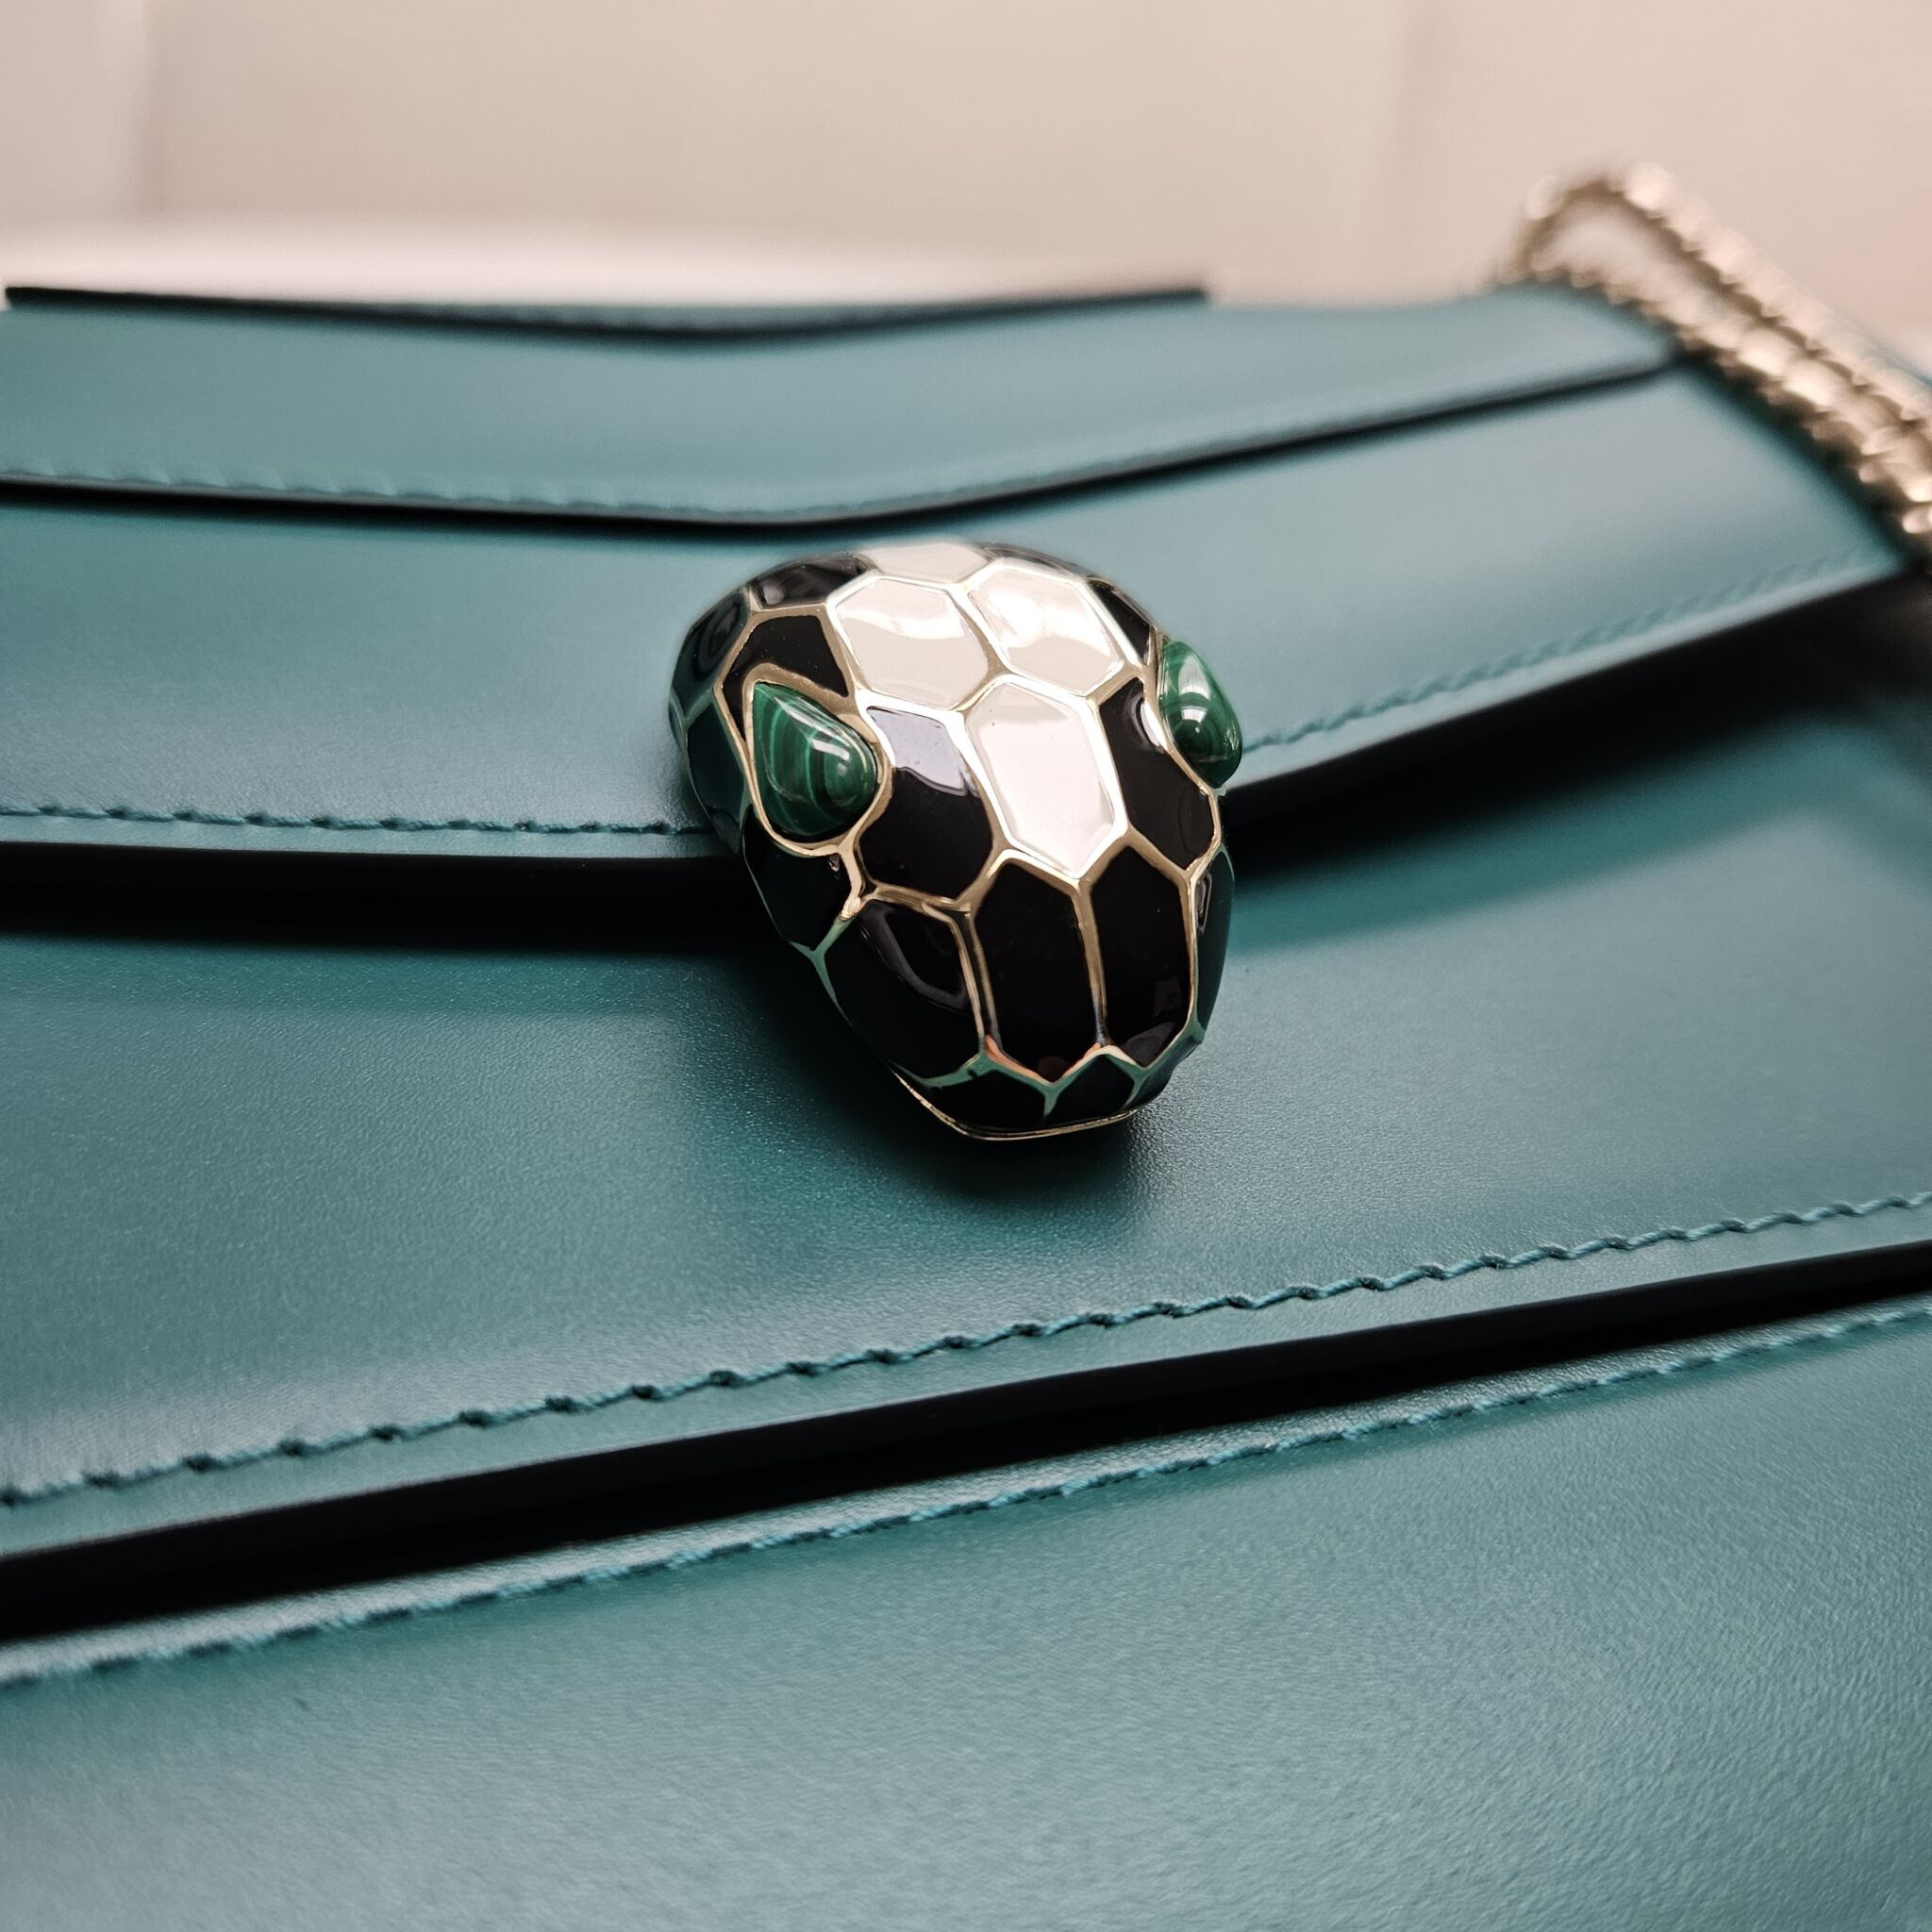 Bulgari Forever Serpenti Bag, Kalveskind, Emerald Green GHW - Laulay Luxury